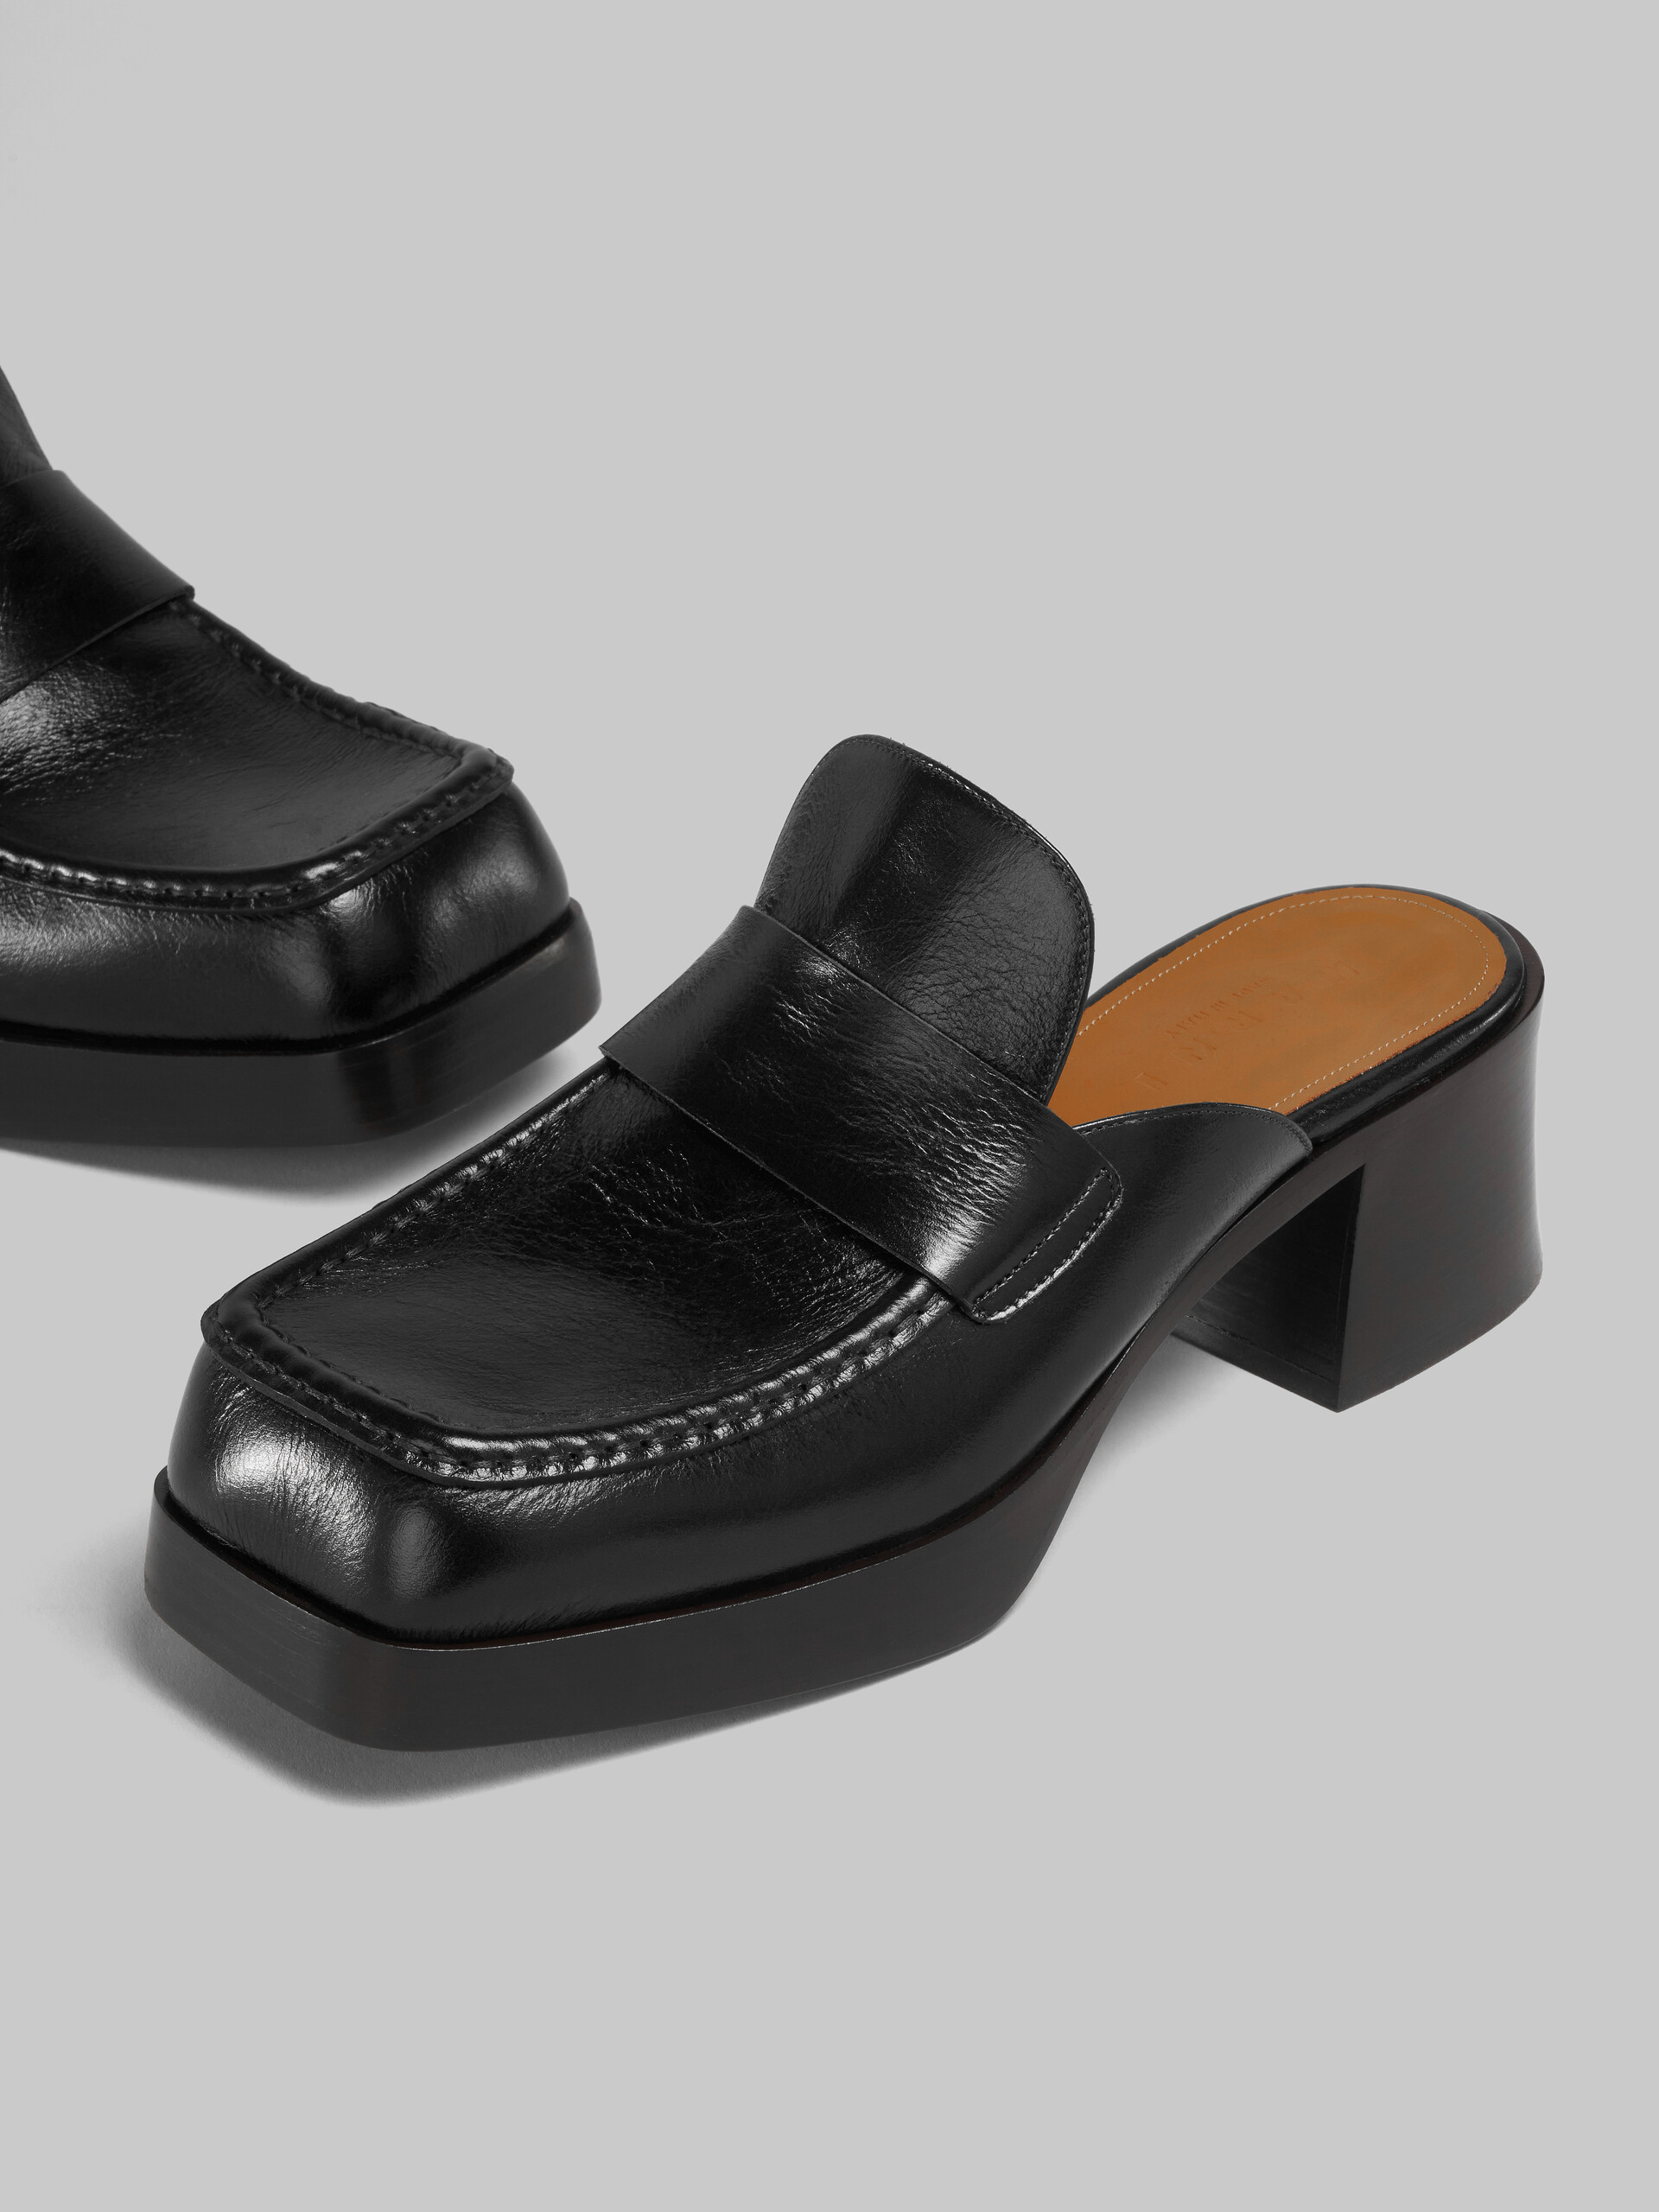 Black leather heeled mule - Clogs - Image 5